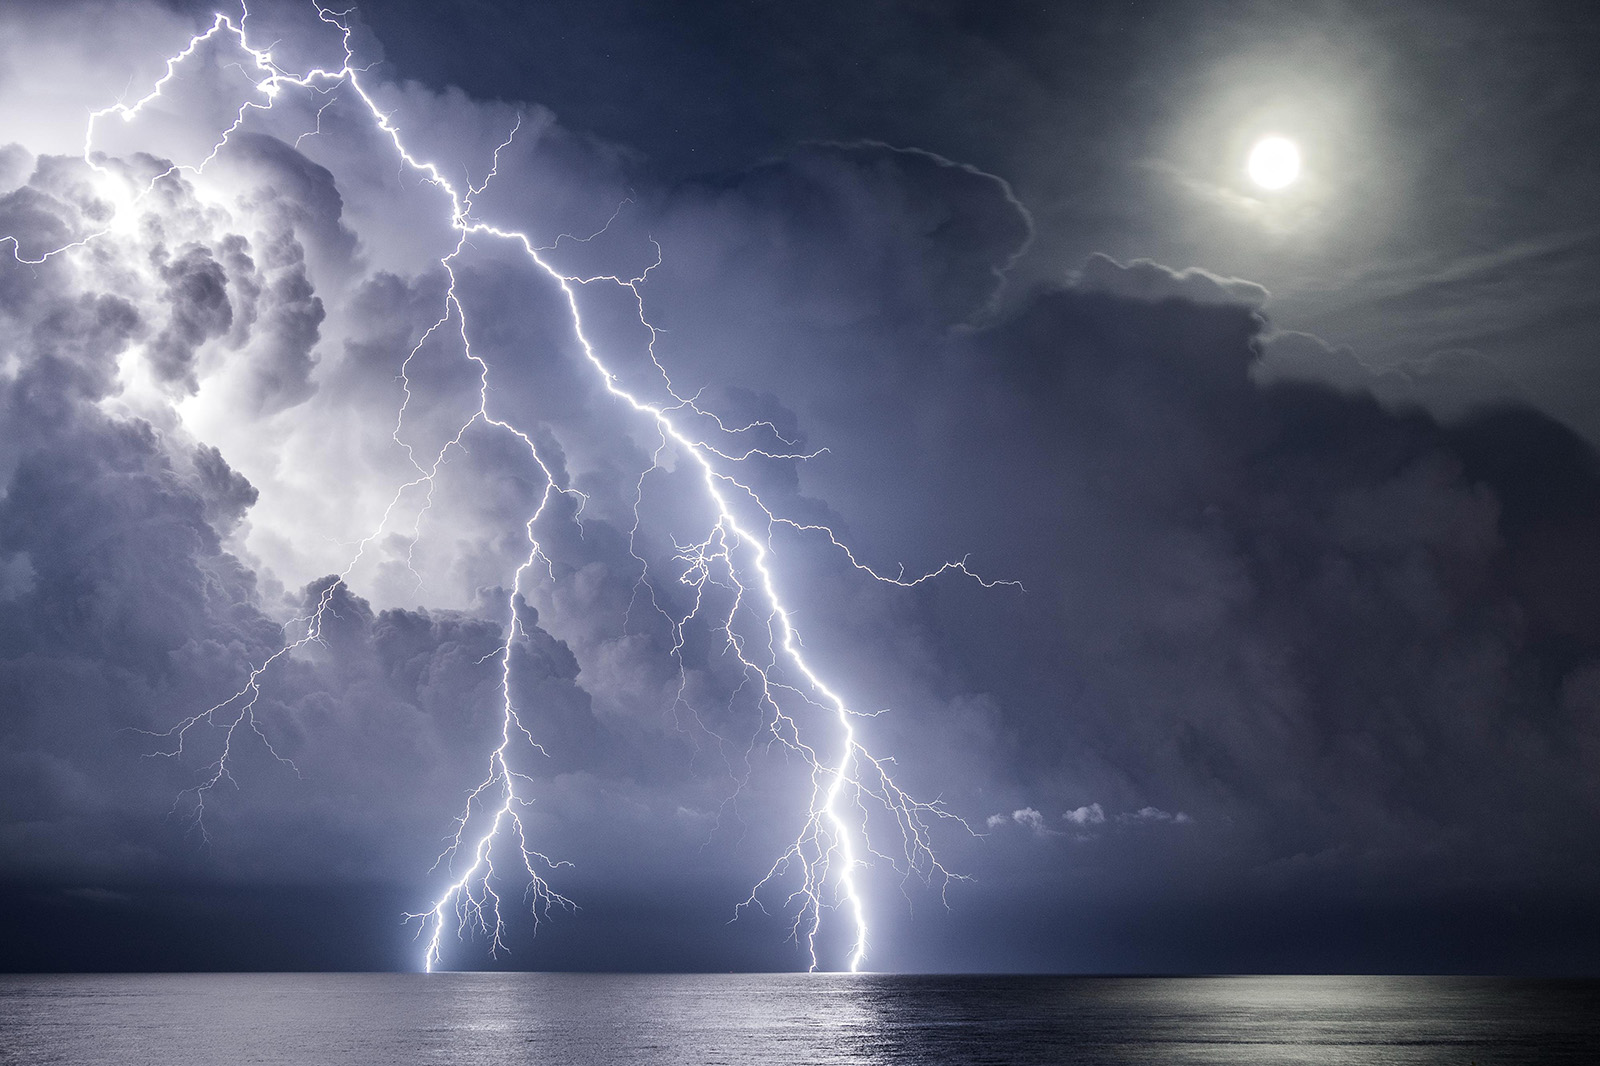 Dreaming of Lightning by Enric Navarrete Bachs